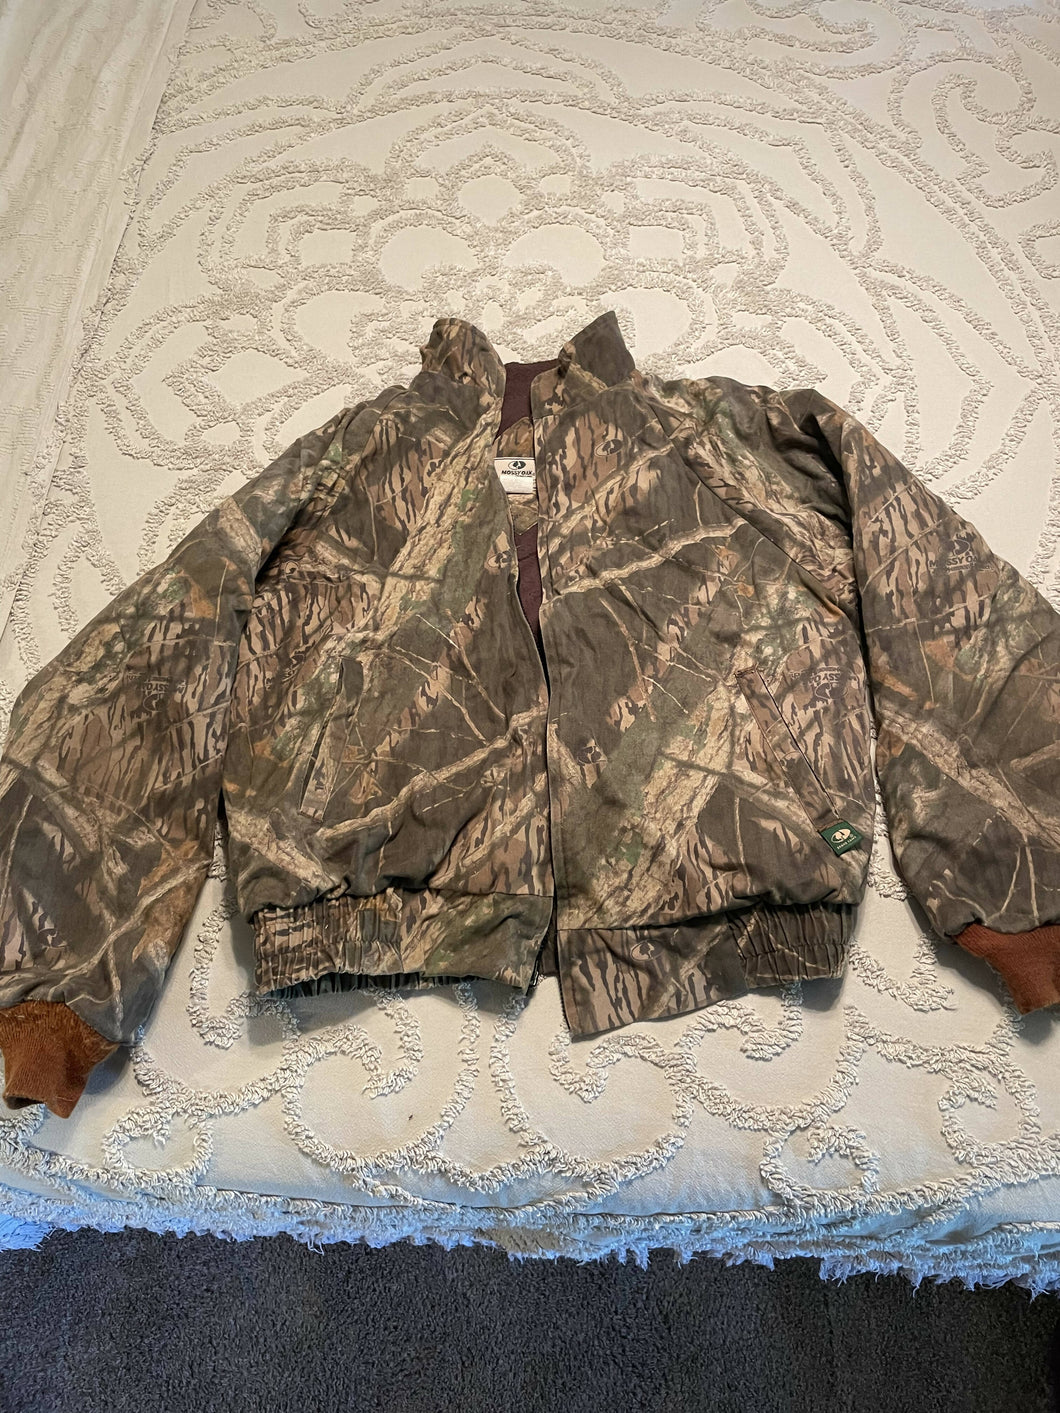 Mossy Oak Shadowbranch bomber jacket